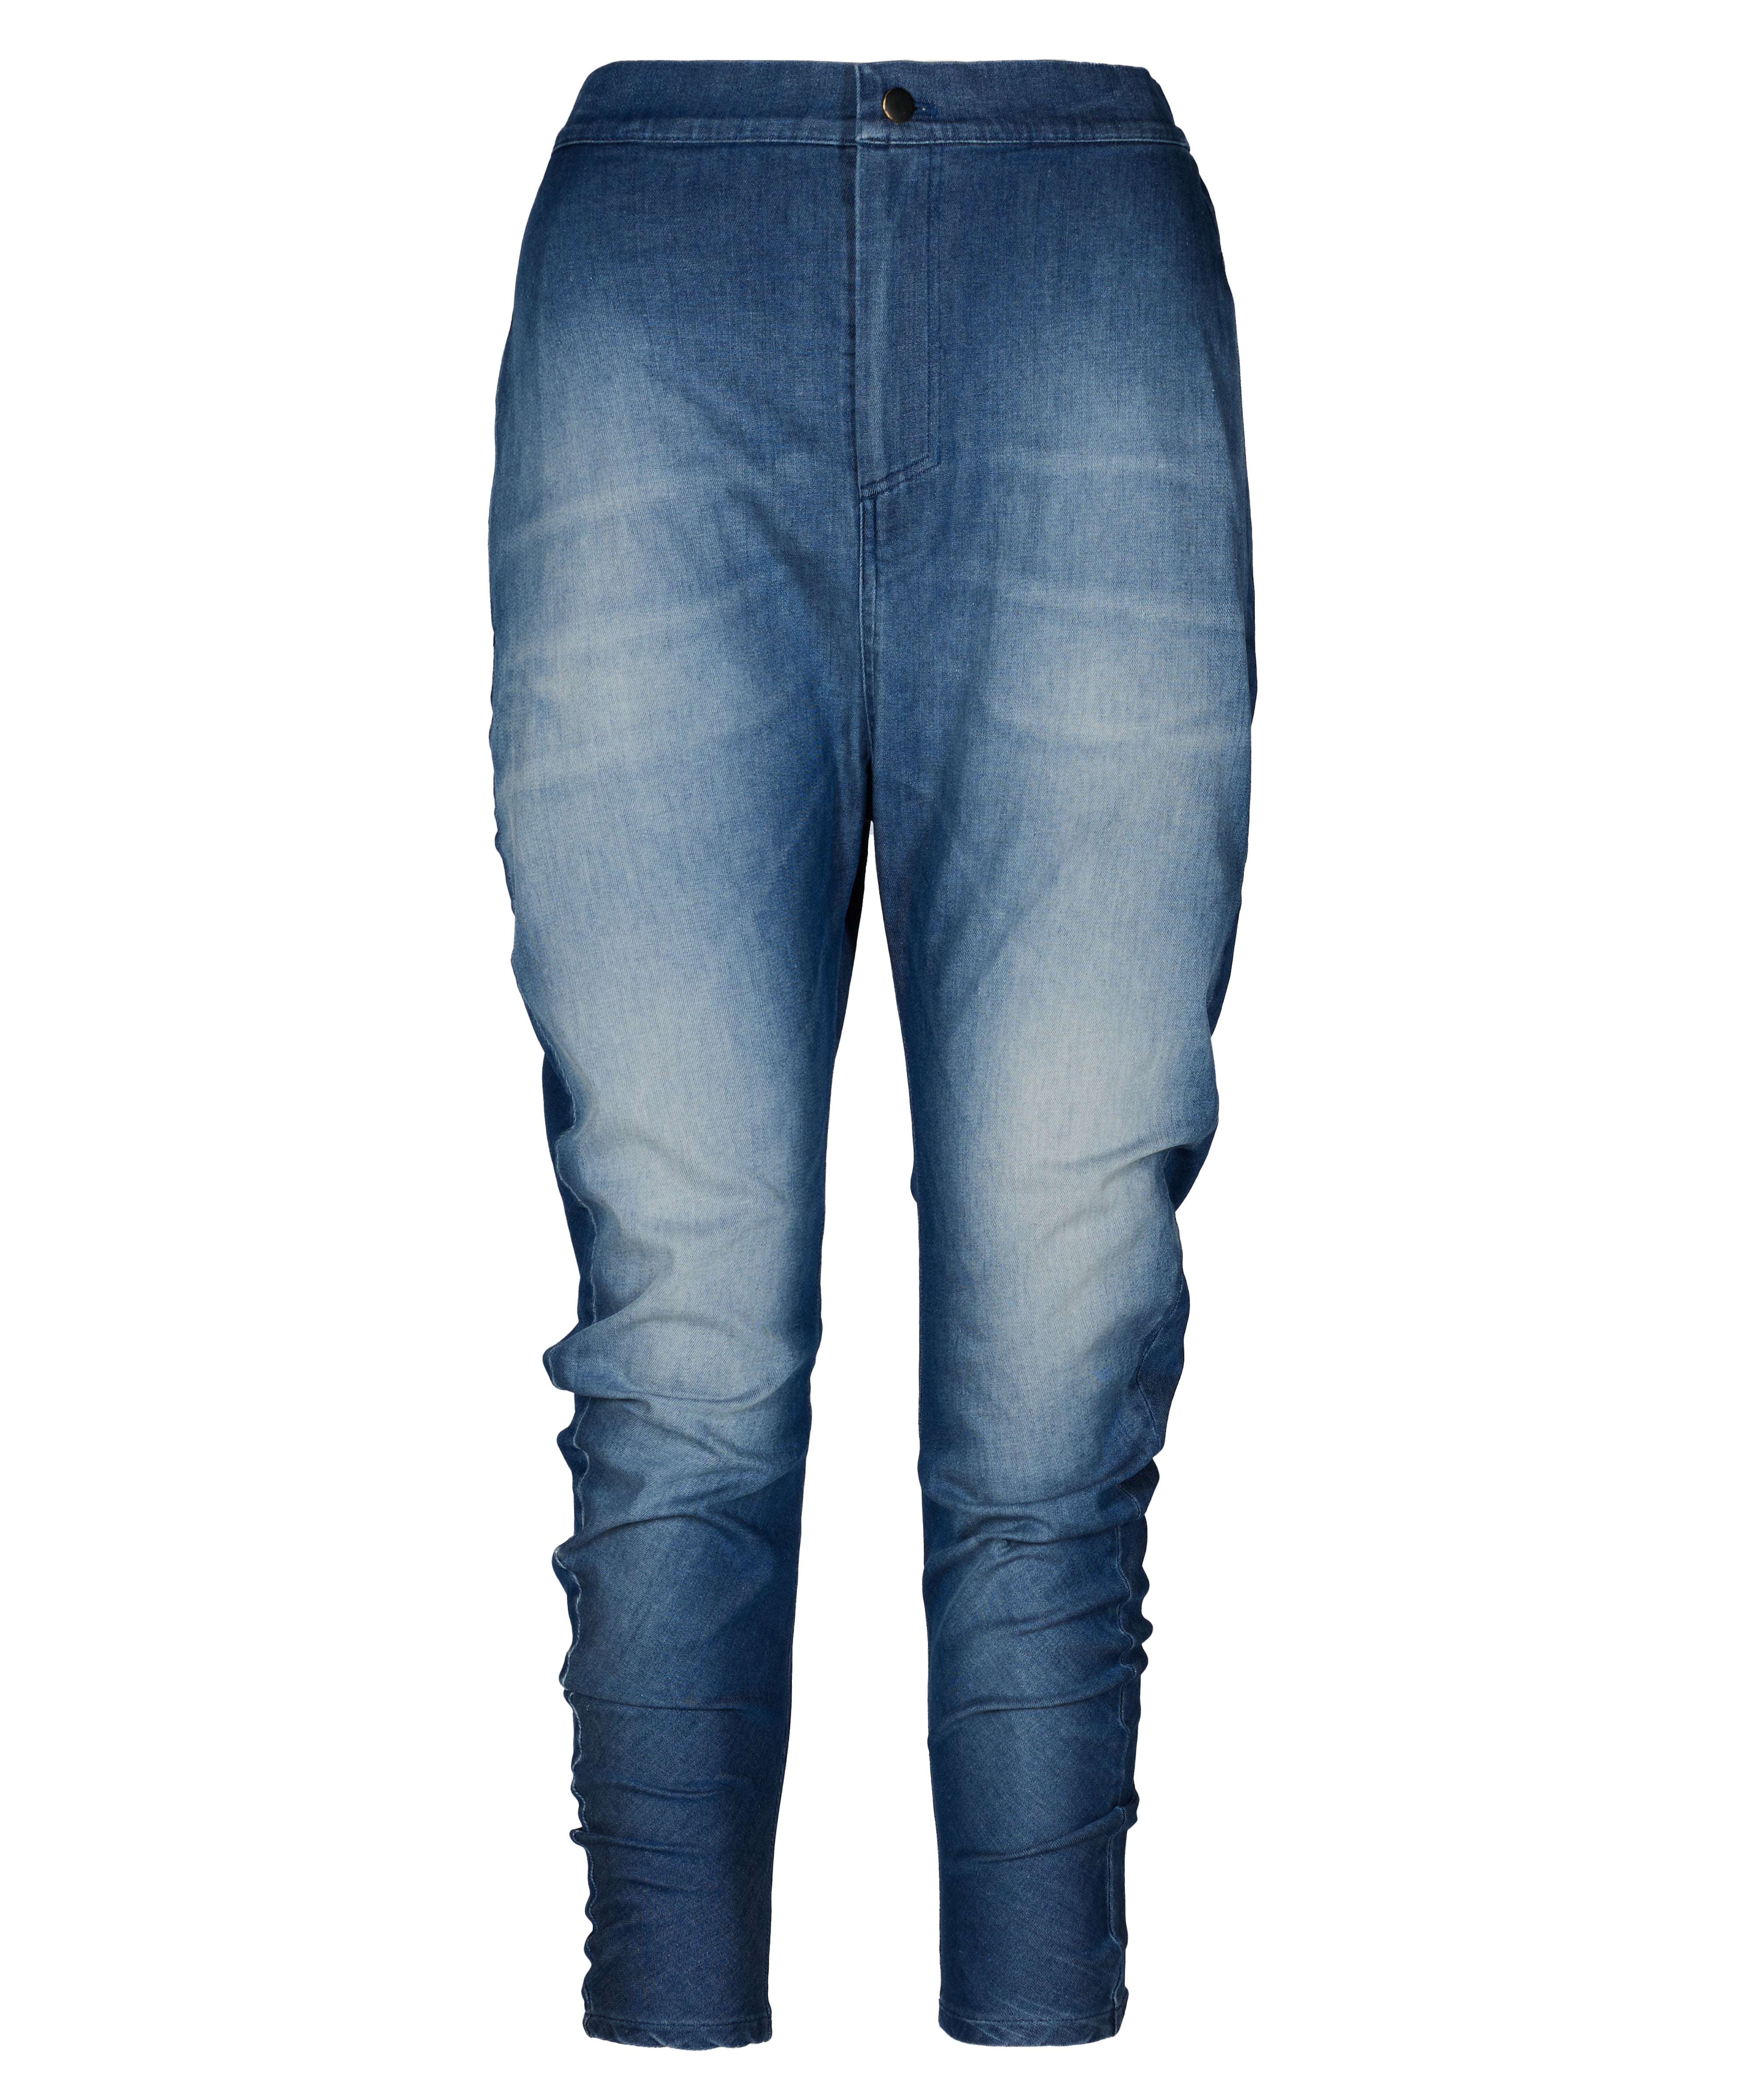 Men’s Dark Blue Twisted Jeans Large Tessitura